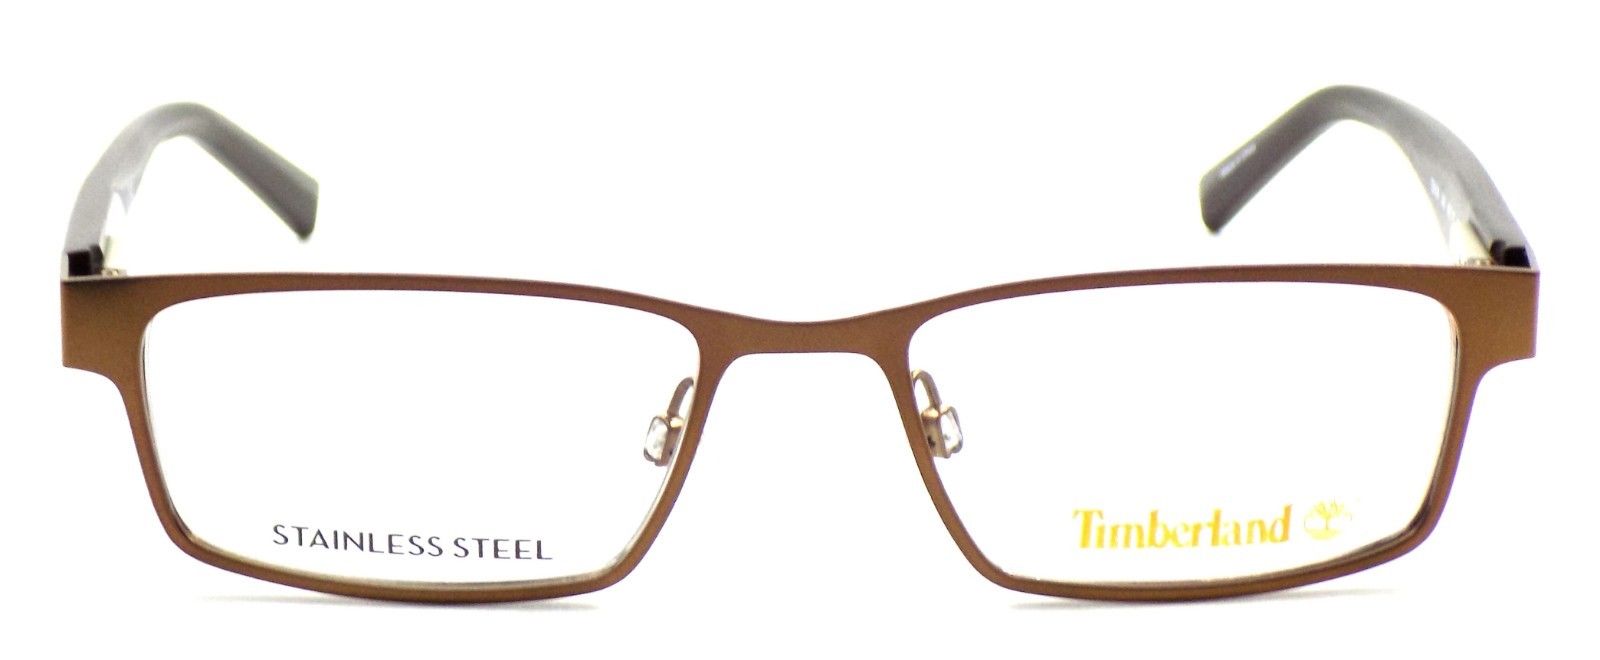 2-TIMBERLAND TB5056 049 Eyeglasses Frames SMALL 49-17-130 Brown + CASE-664689641482-IKSpecs